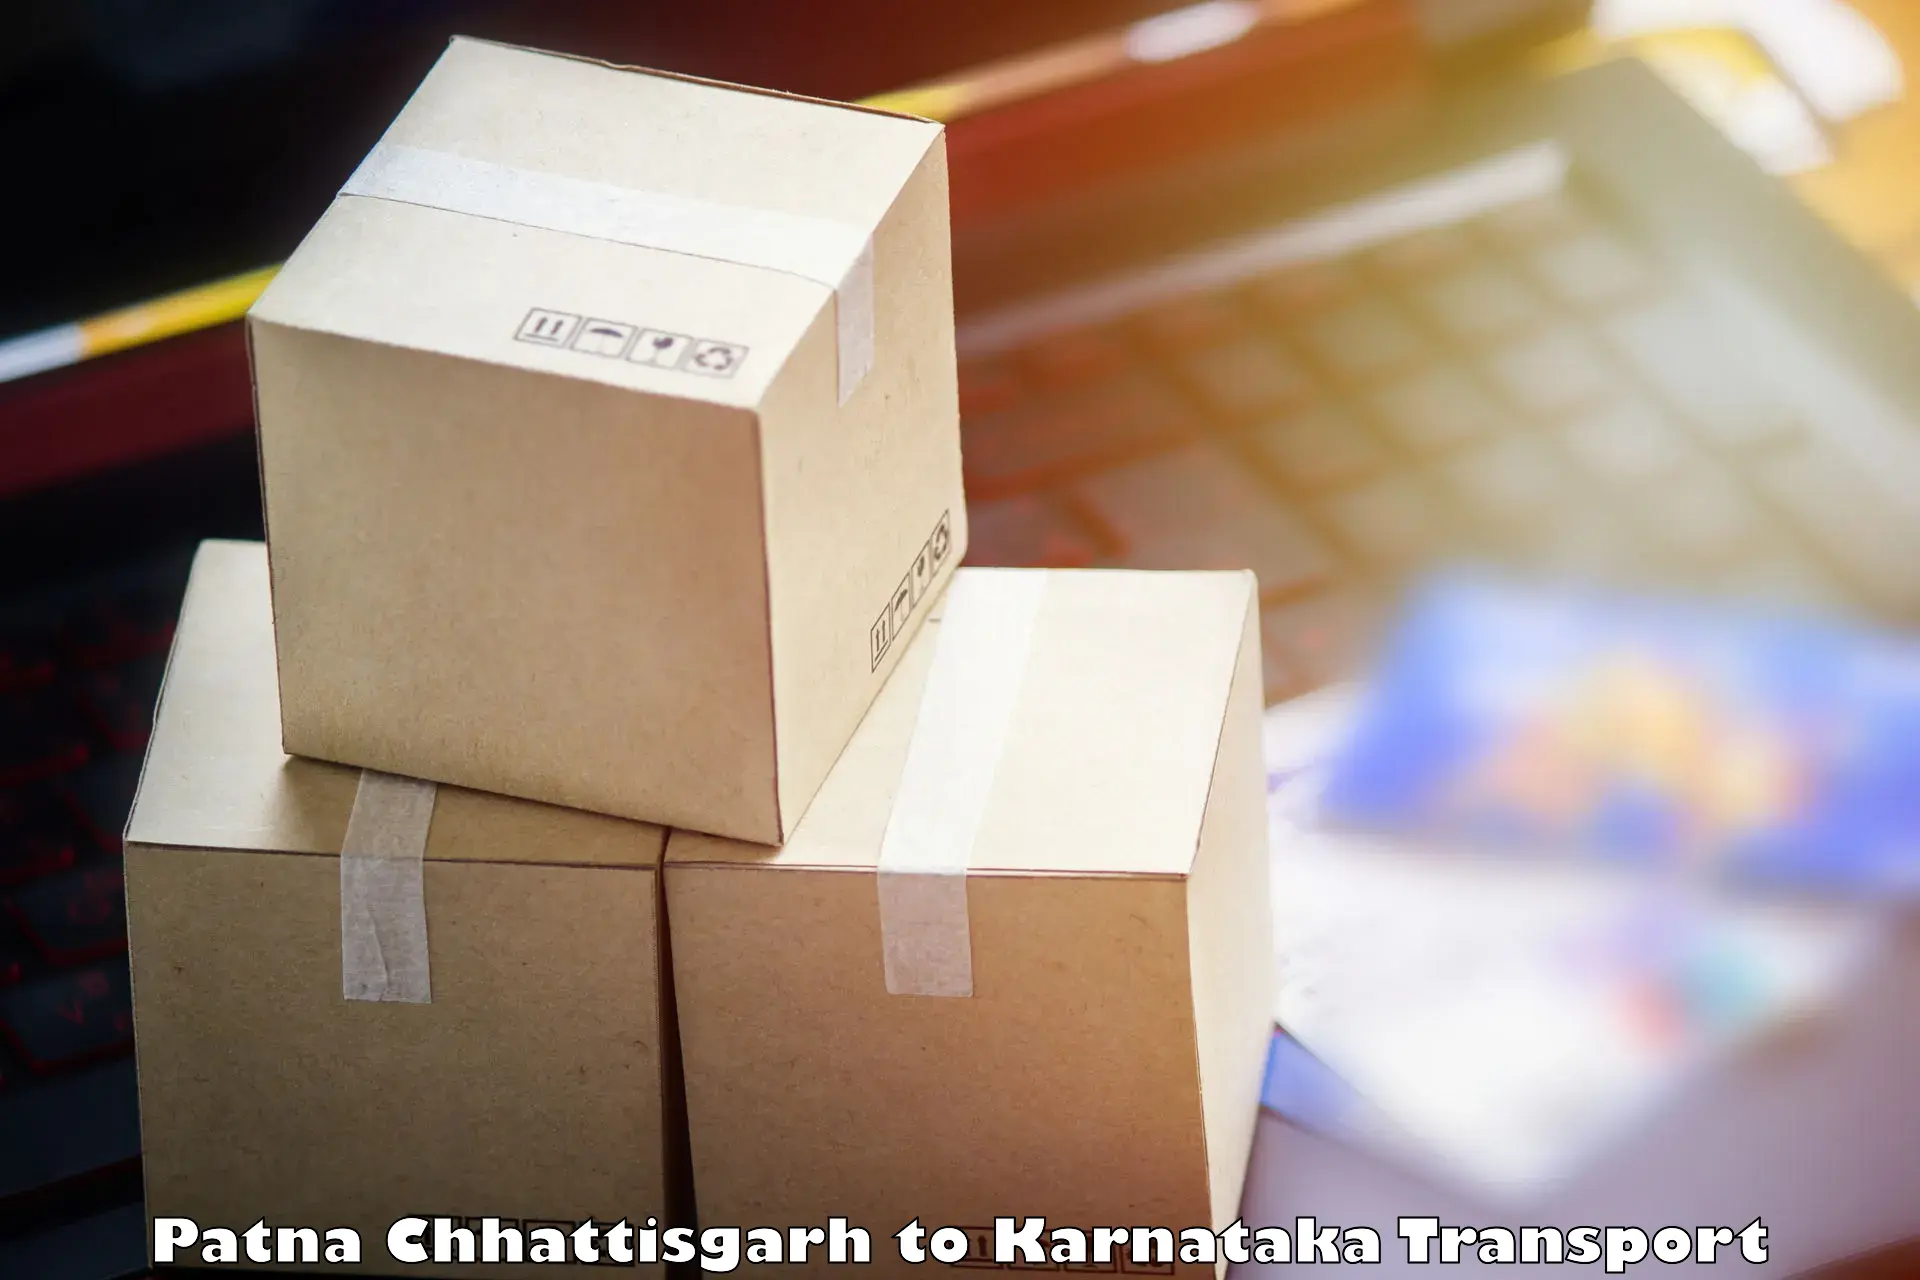 Shipping partner Patna Chhattisgarh to Hukkeri